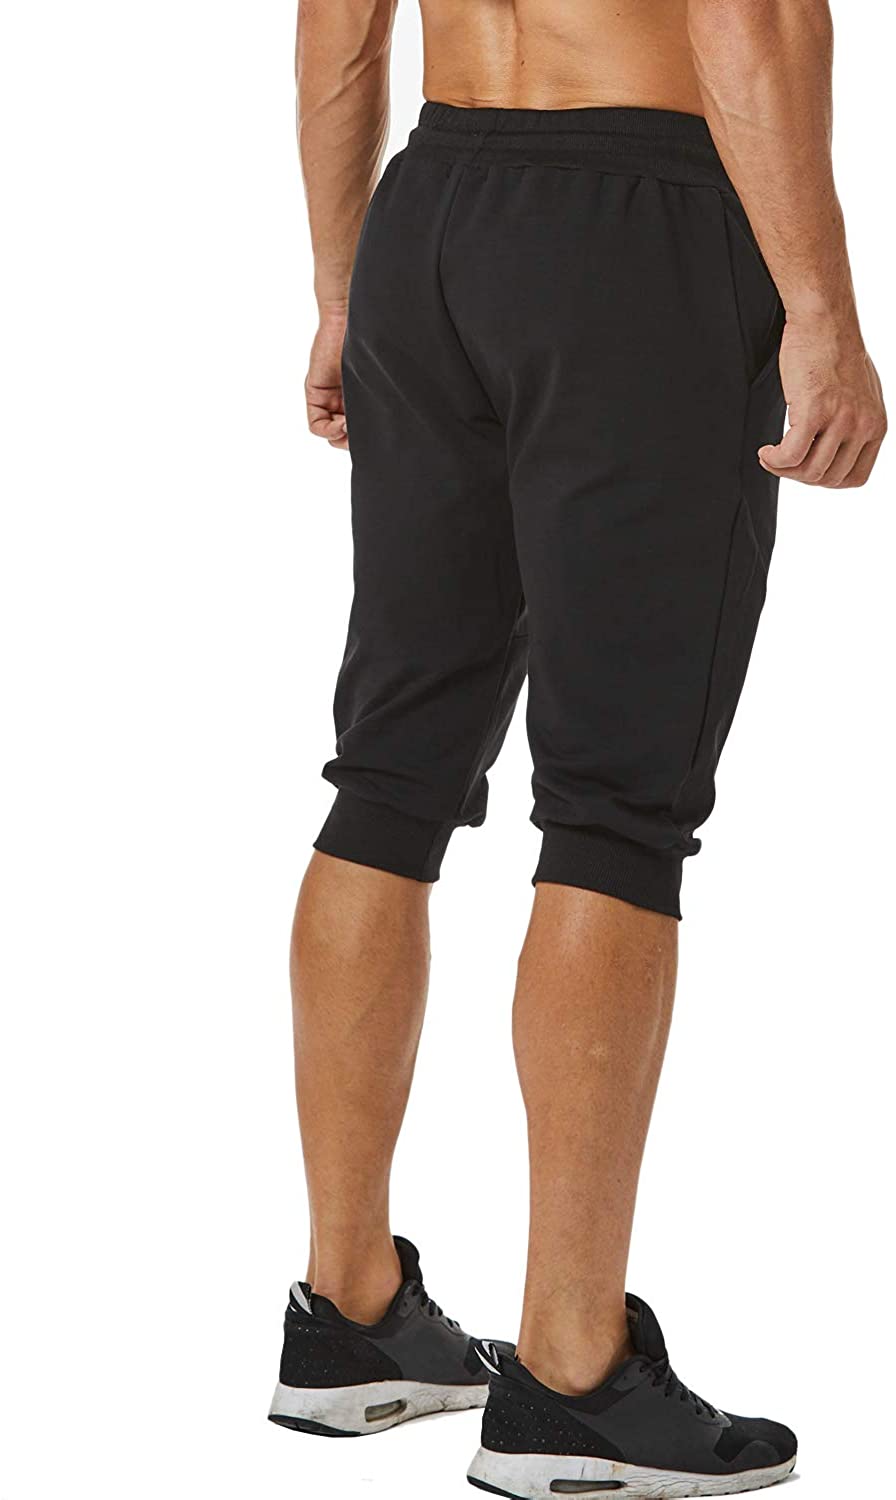 Black jogger pants